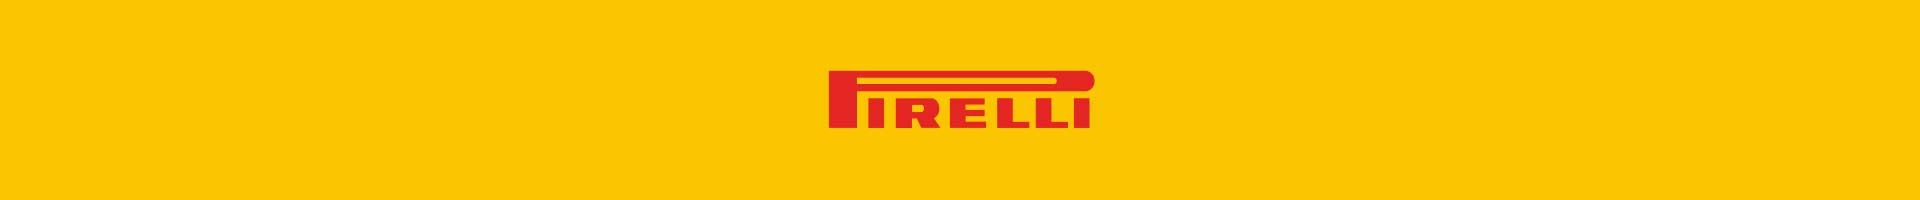 pirelli-logo-divisor